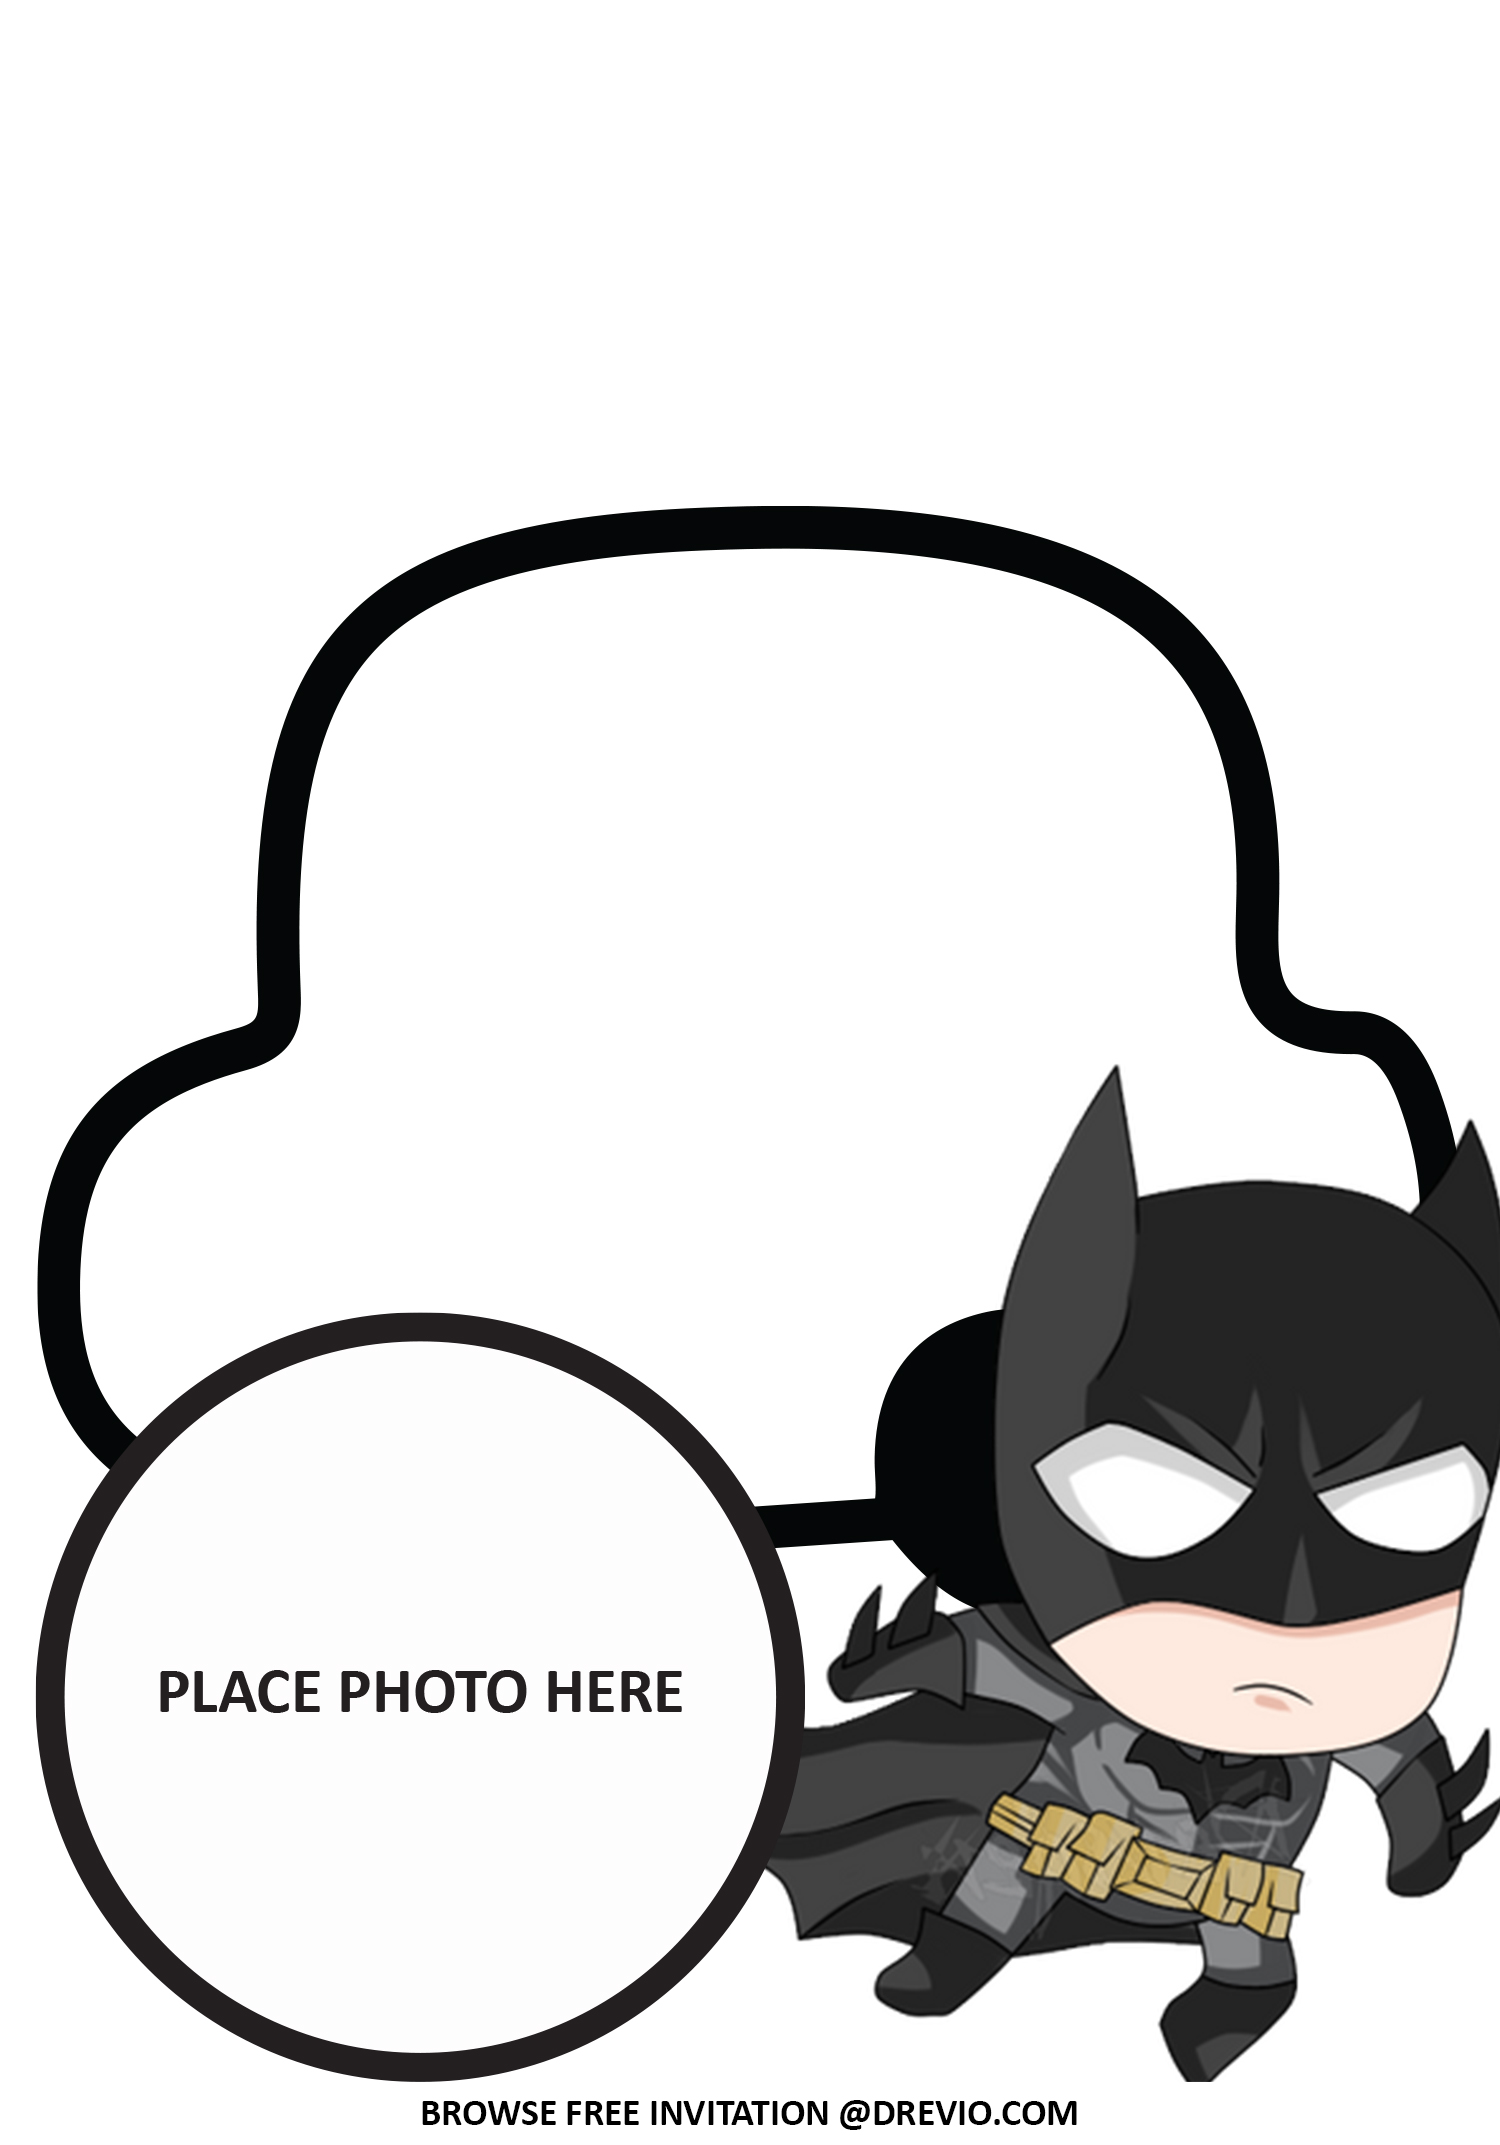 FREE Invitations) Batman Themed Baby Shower Invitations + Party Ideas |  Download Hundreds FREE PRINTABLE Birthday Invitation Templates